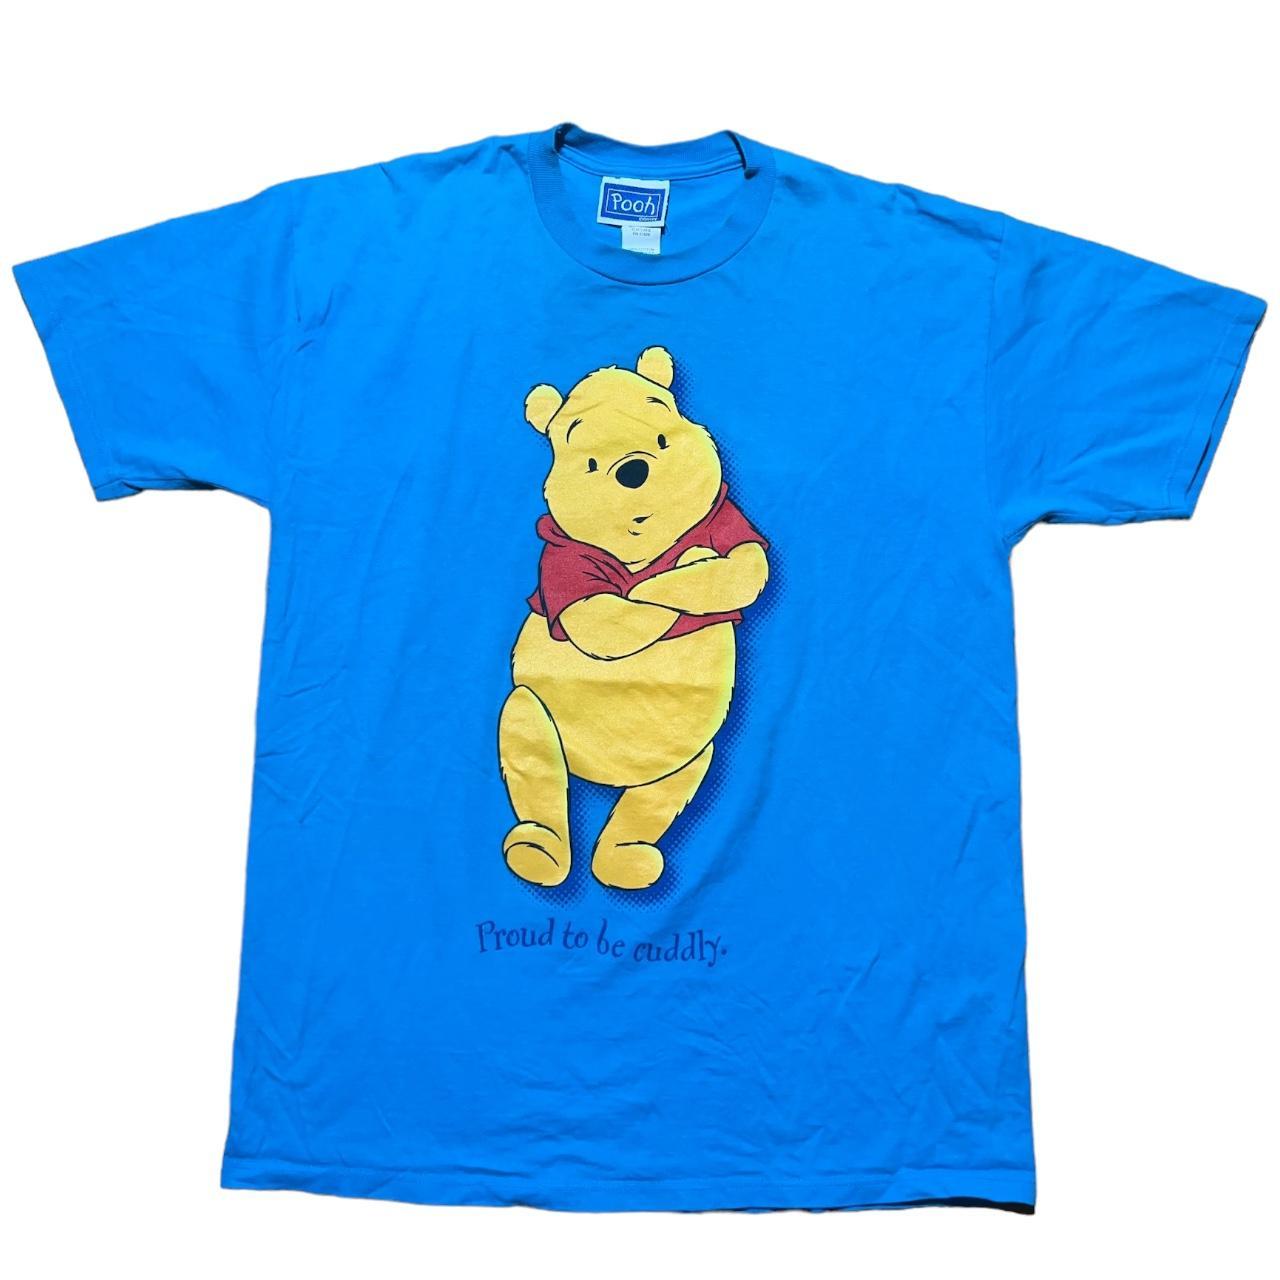 Vintage Disney Shirt Winnie the Pooh, Big Pooh...